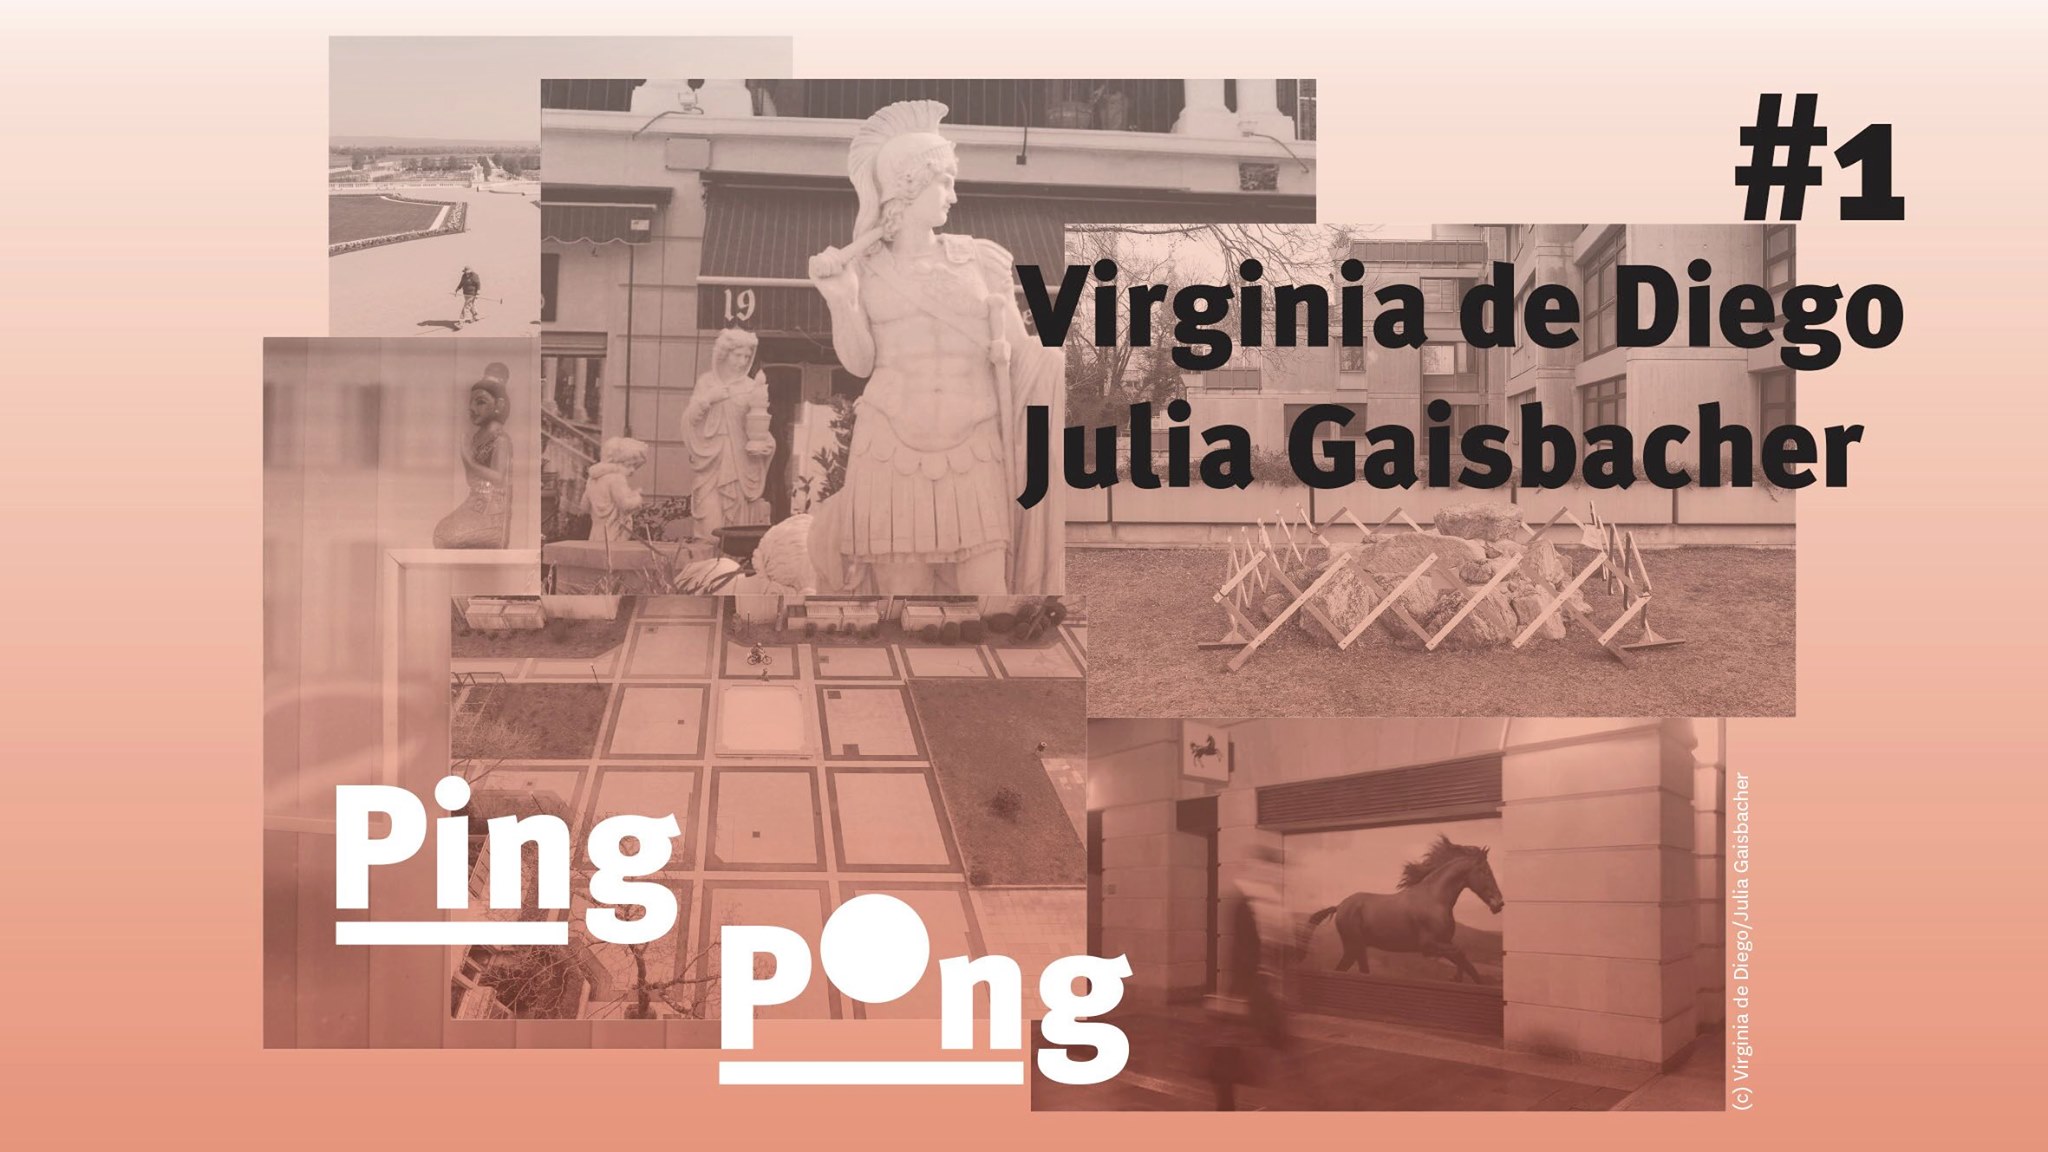 PING PONG #1 Virginia de Diego und Julia Gaisbacher